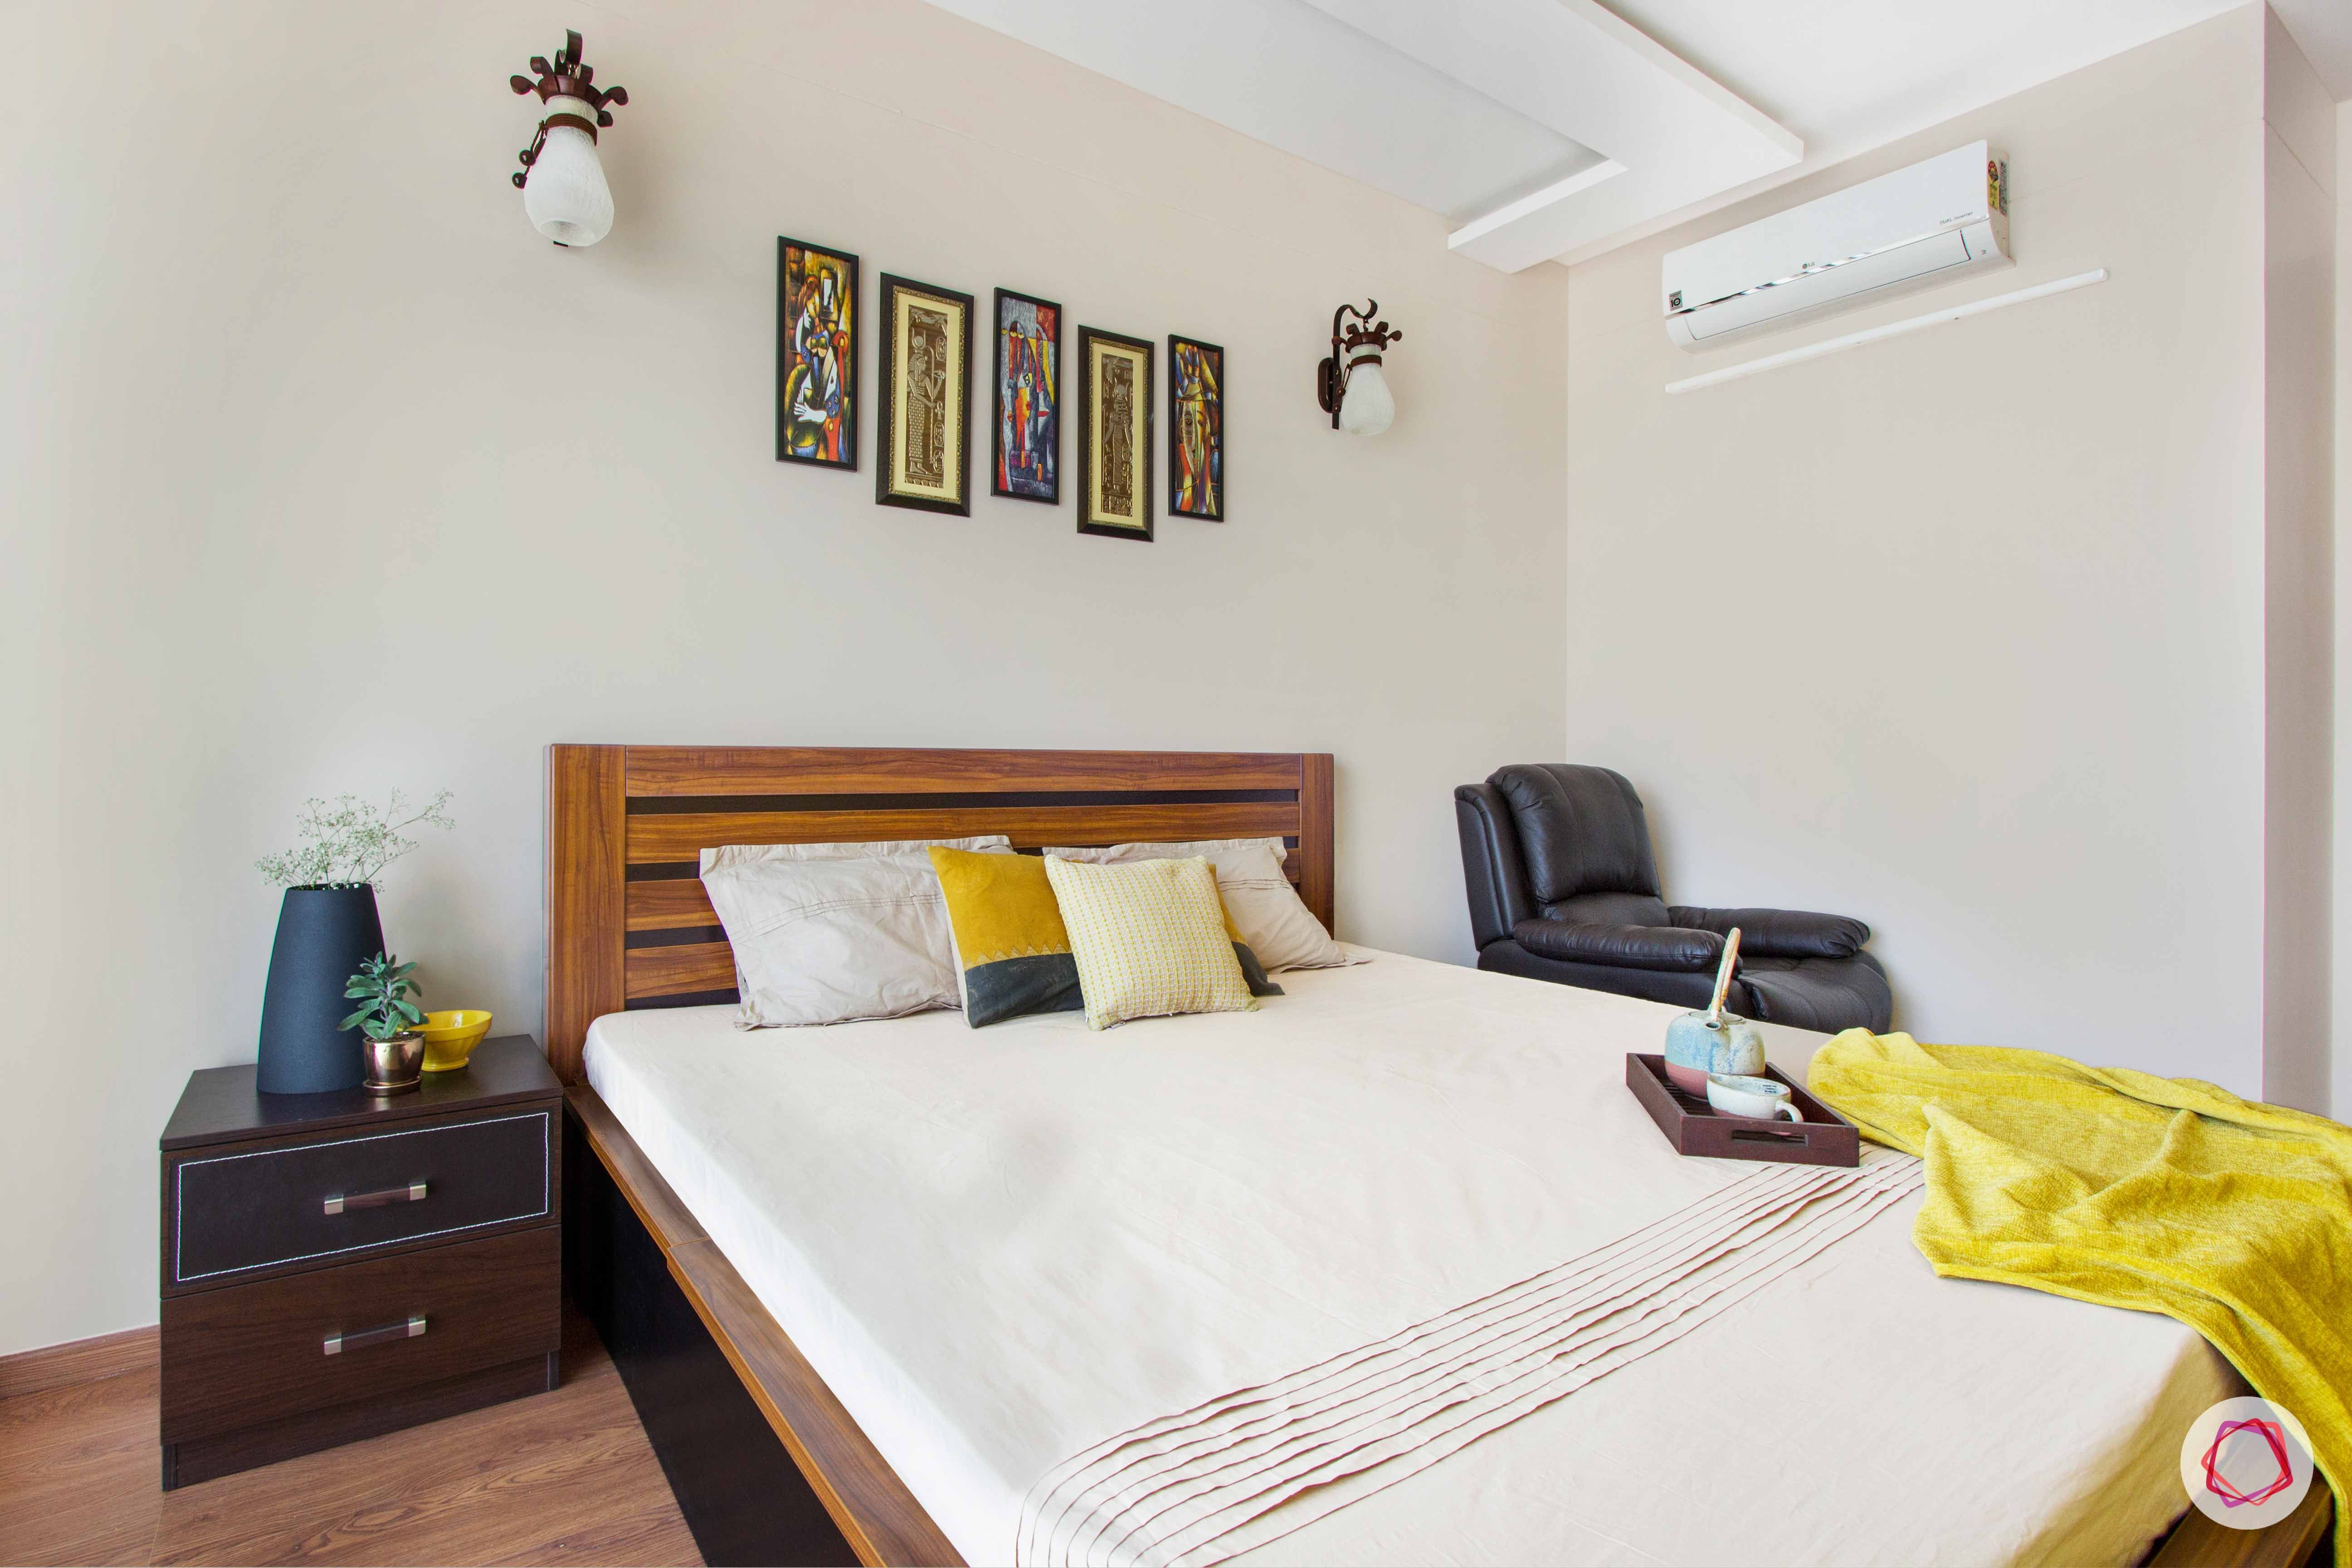 snn raj greenbay-master bedroom-wooden bed-bedside table